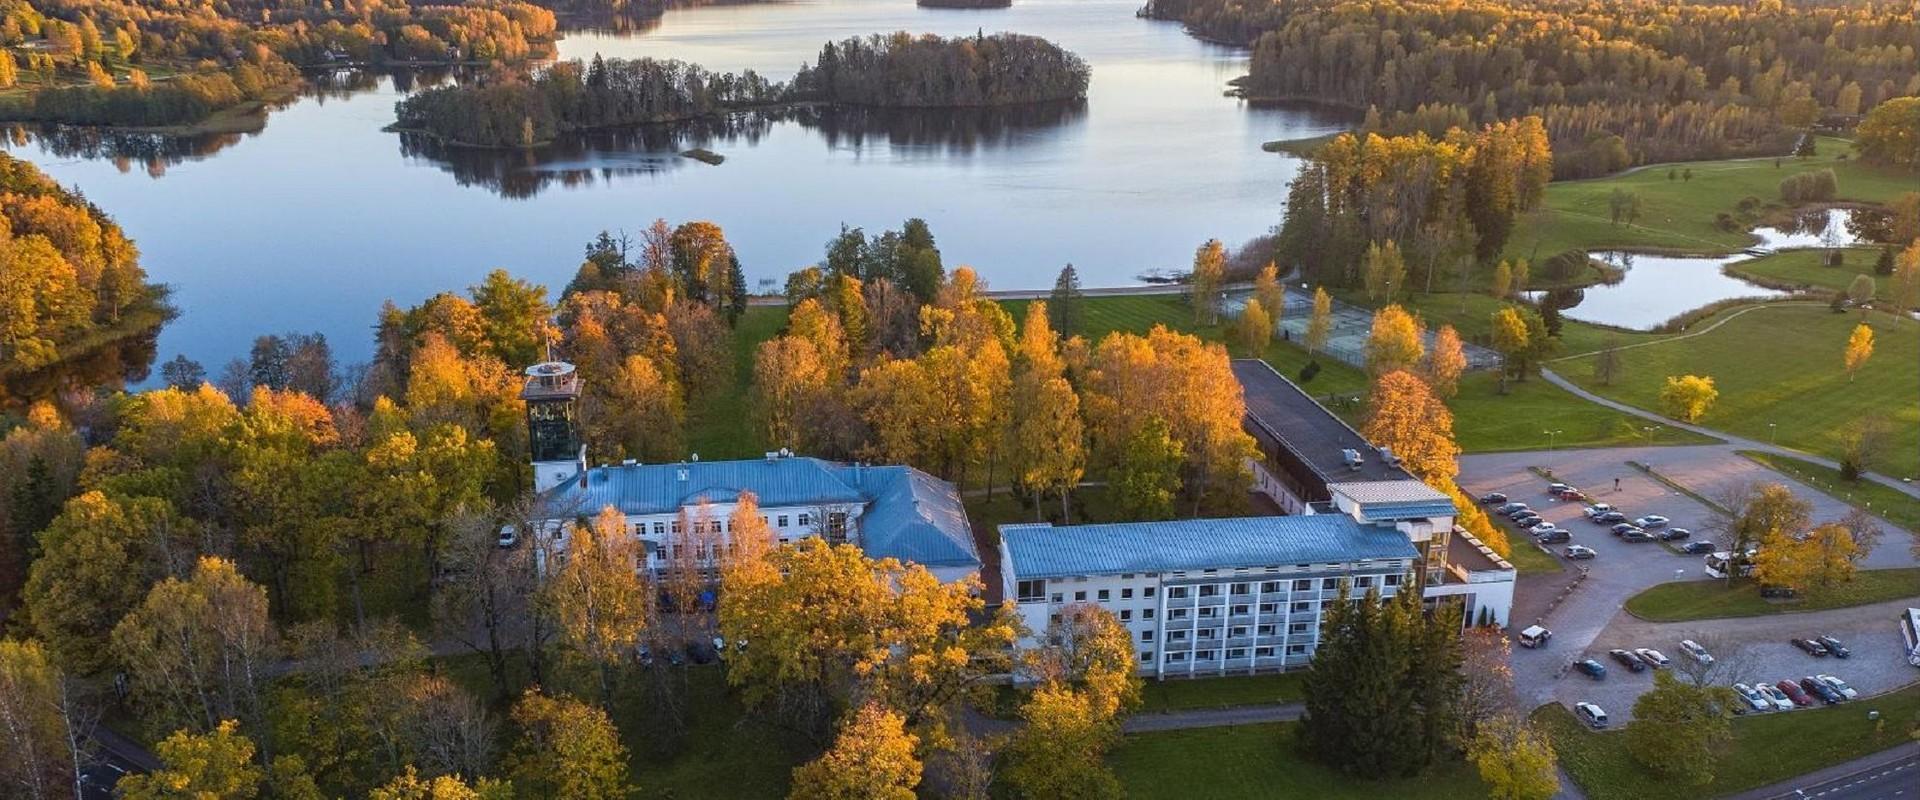 Pühajärve Spa & Holiday Resort in autumn